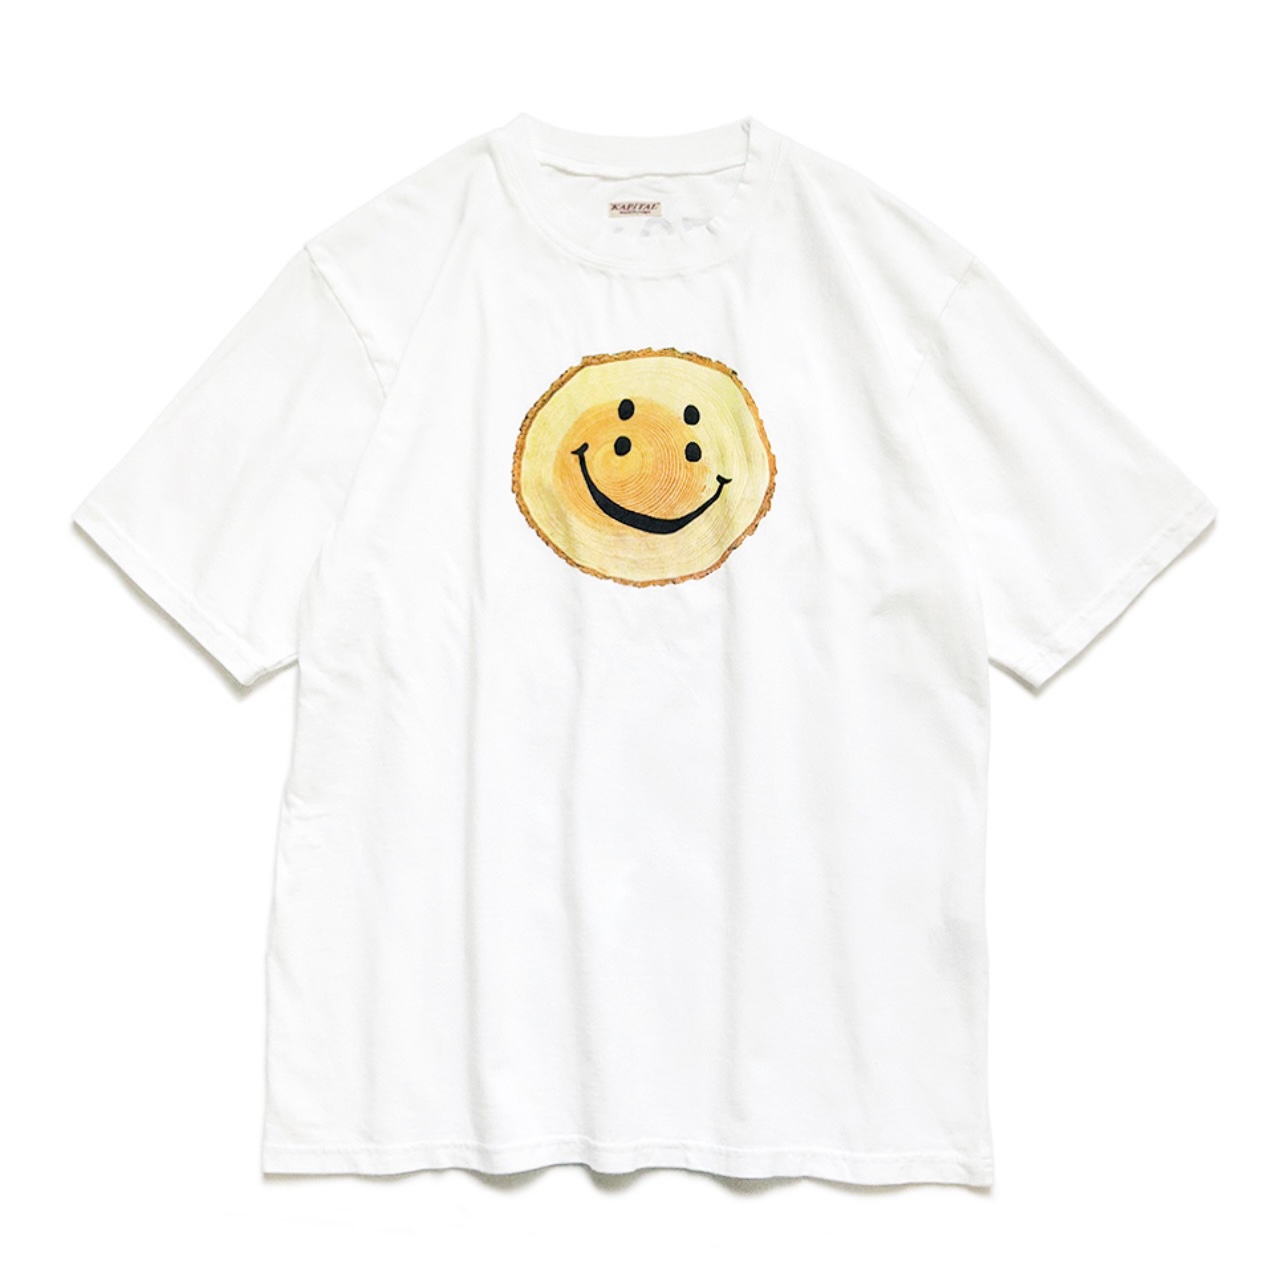 MZU KAPITAL 히라타 카즈히로 일본식 캐주얼 스마일 반팔 티셔츠(2color)